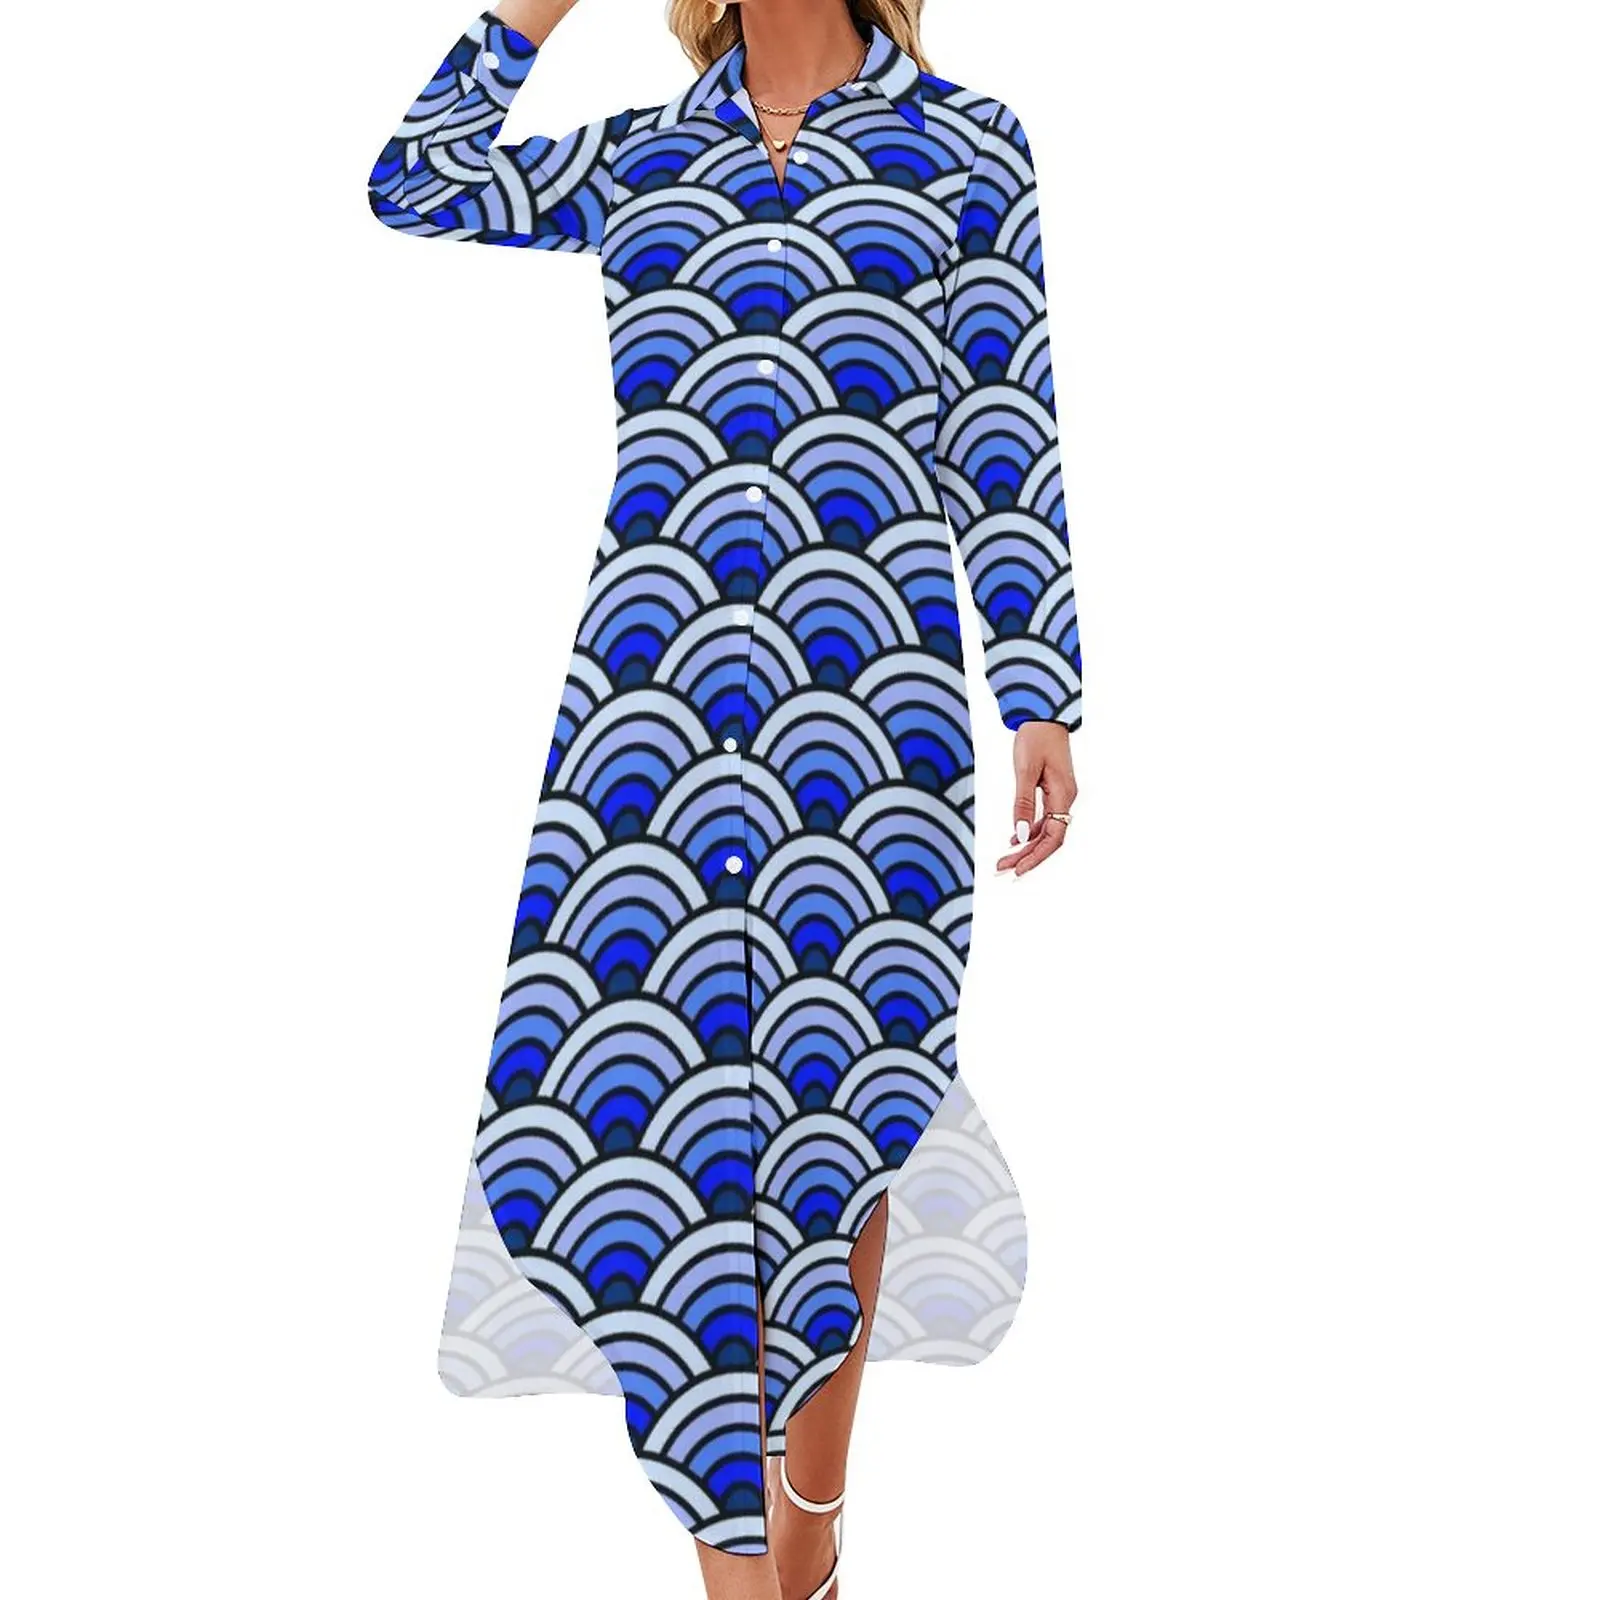 

Blue Waves Seigaiha Casual Dress Traditional Japanese Aesthetic Dresses Long Sleeve Vintage V Neck Design Oversize Chiffon Dress